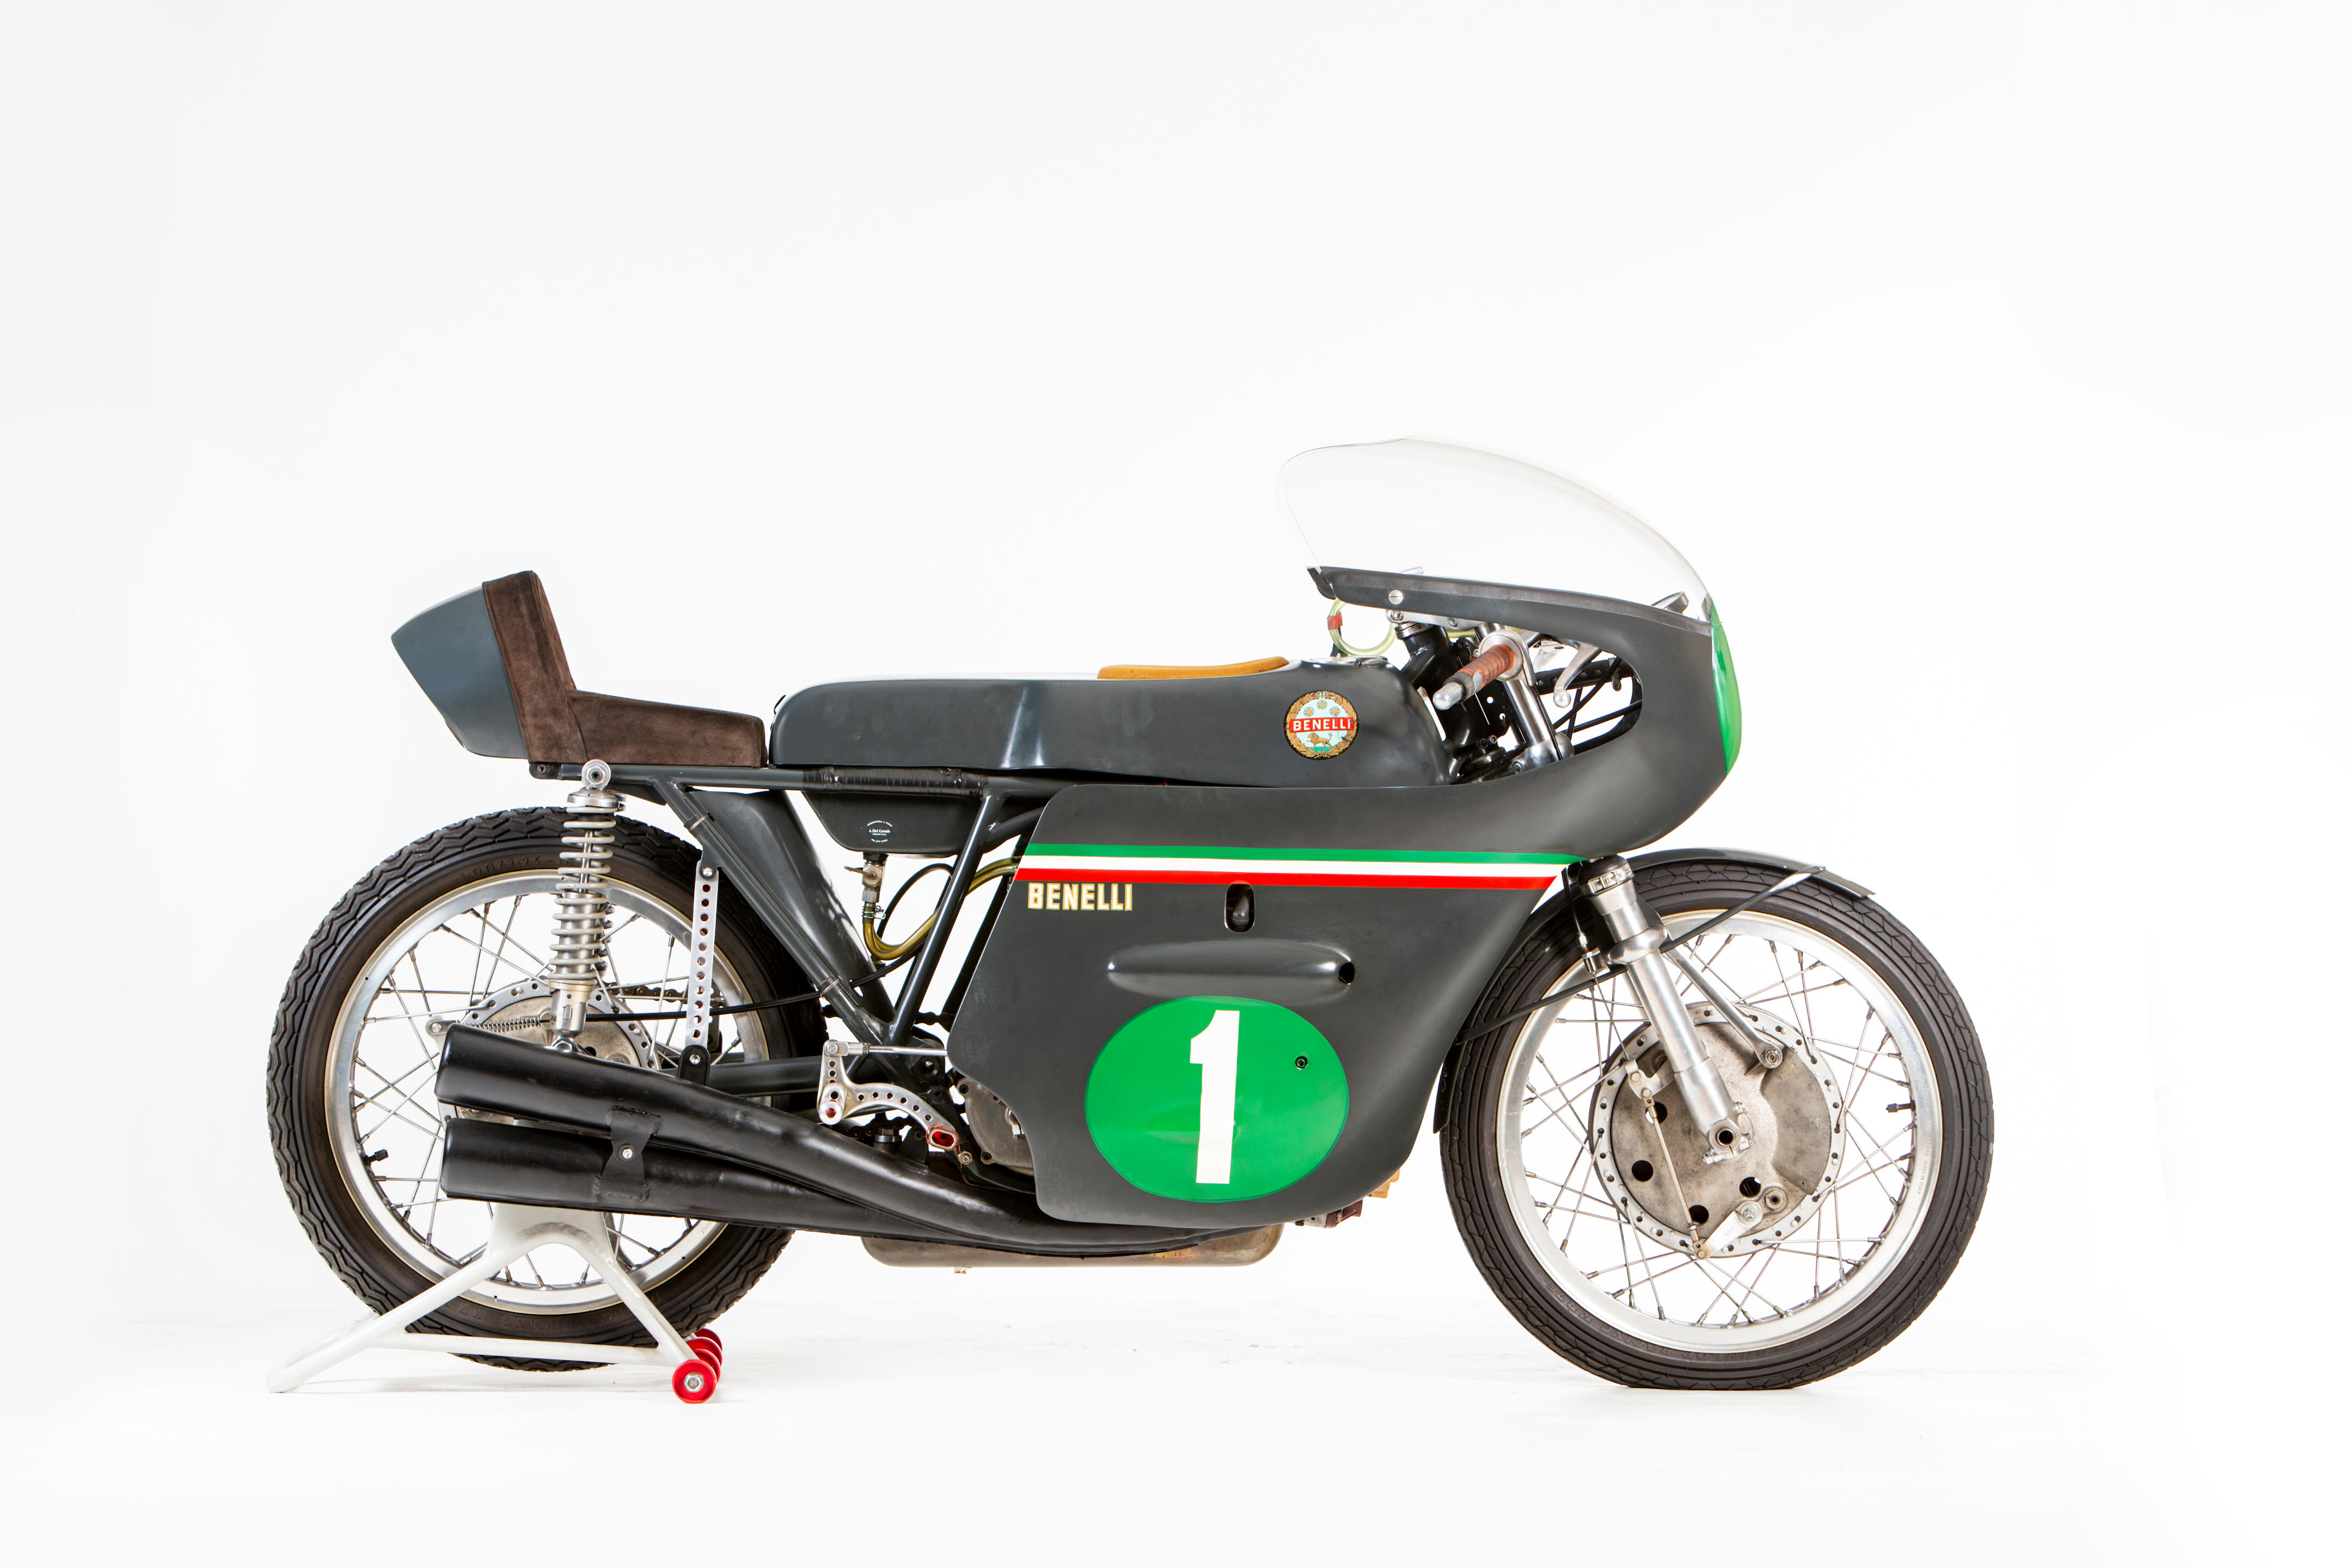 1969 Benelli 250-4 Grand Prix GP 247cc Italy Race Motorcycle Photo Spec Card 